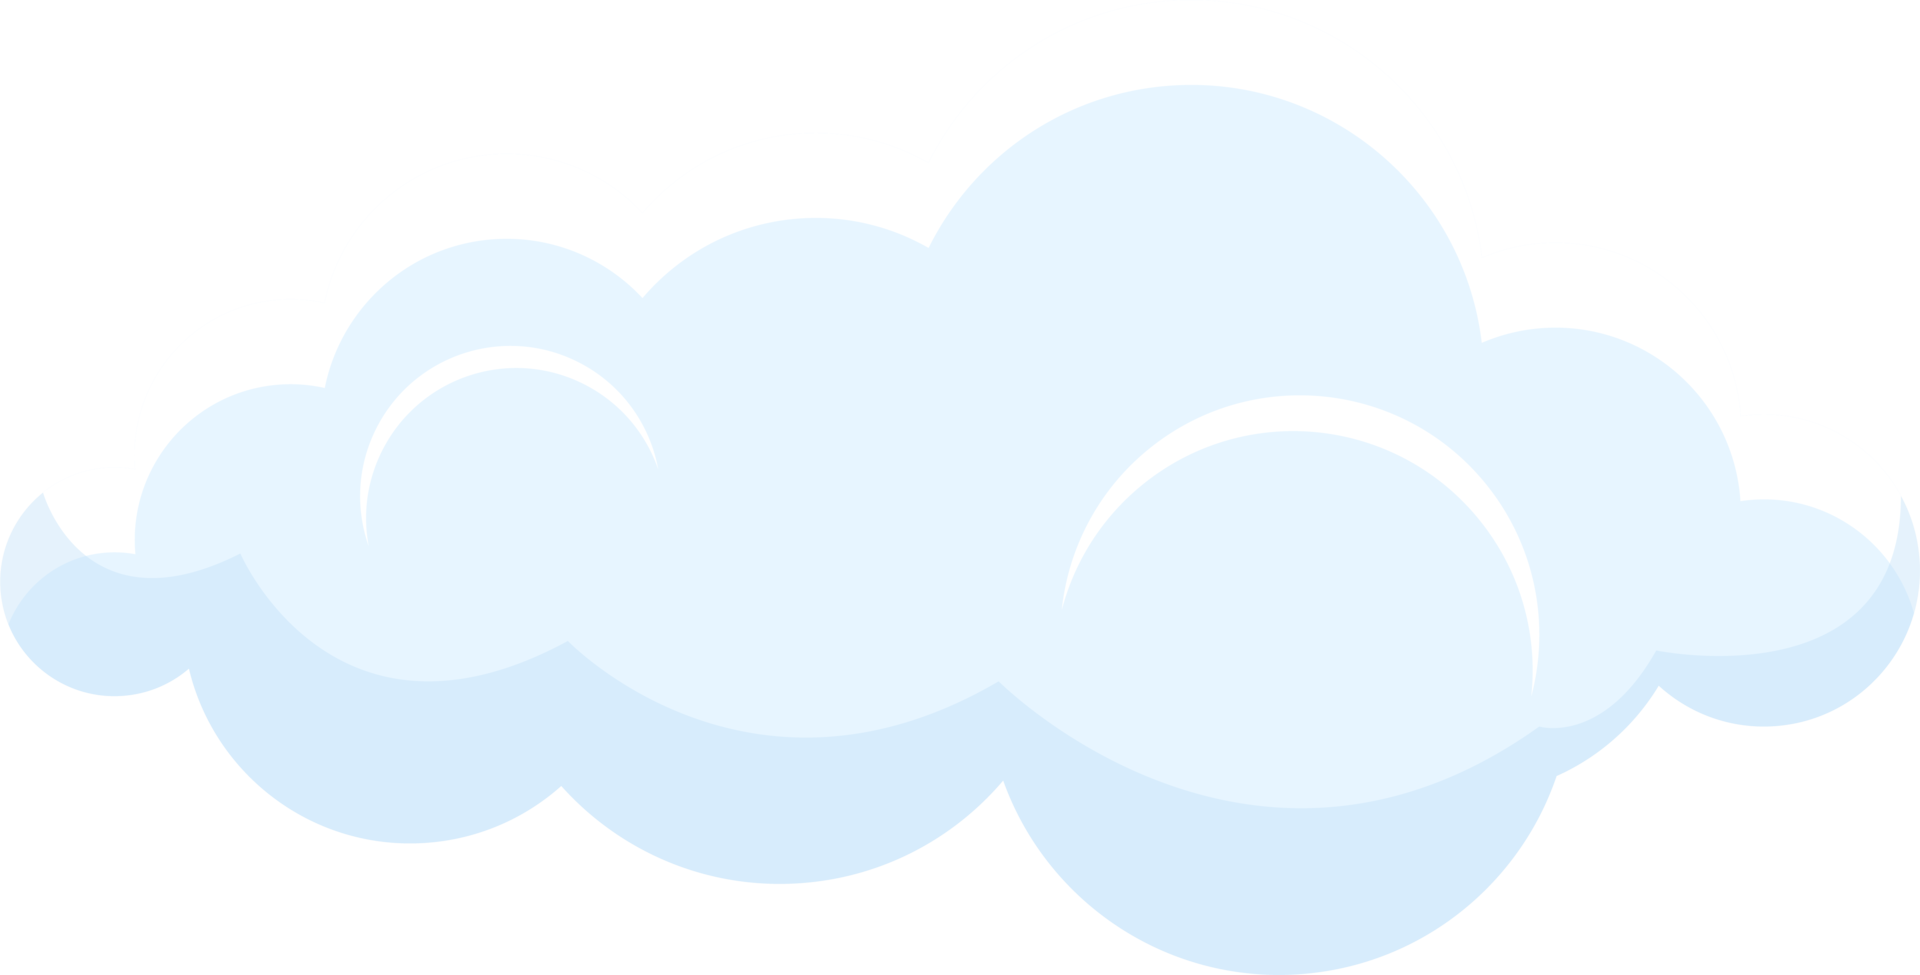 White cloud clipart design illustration png